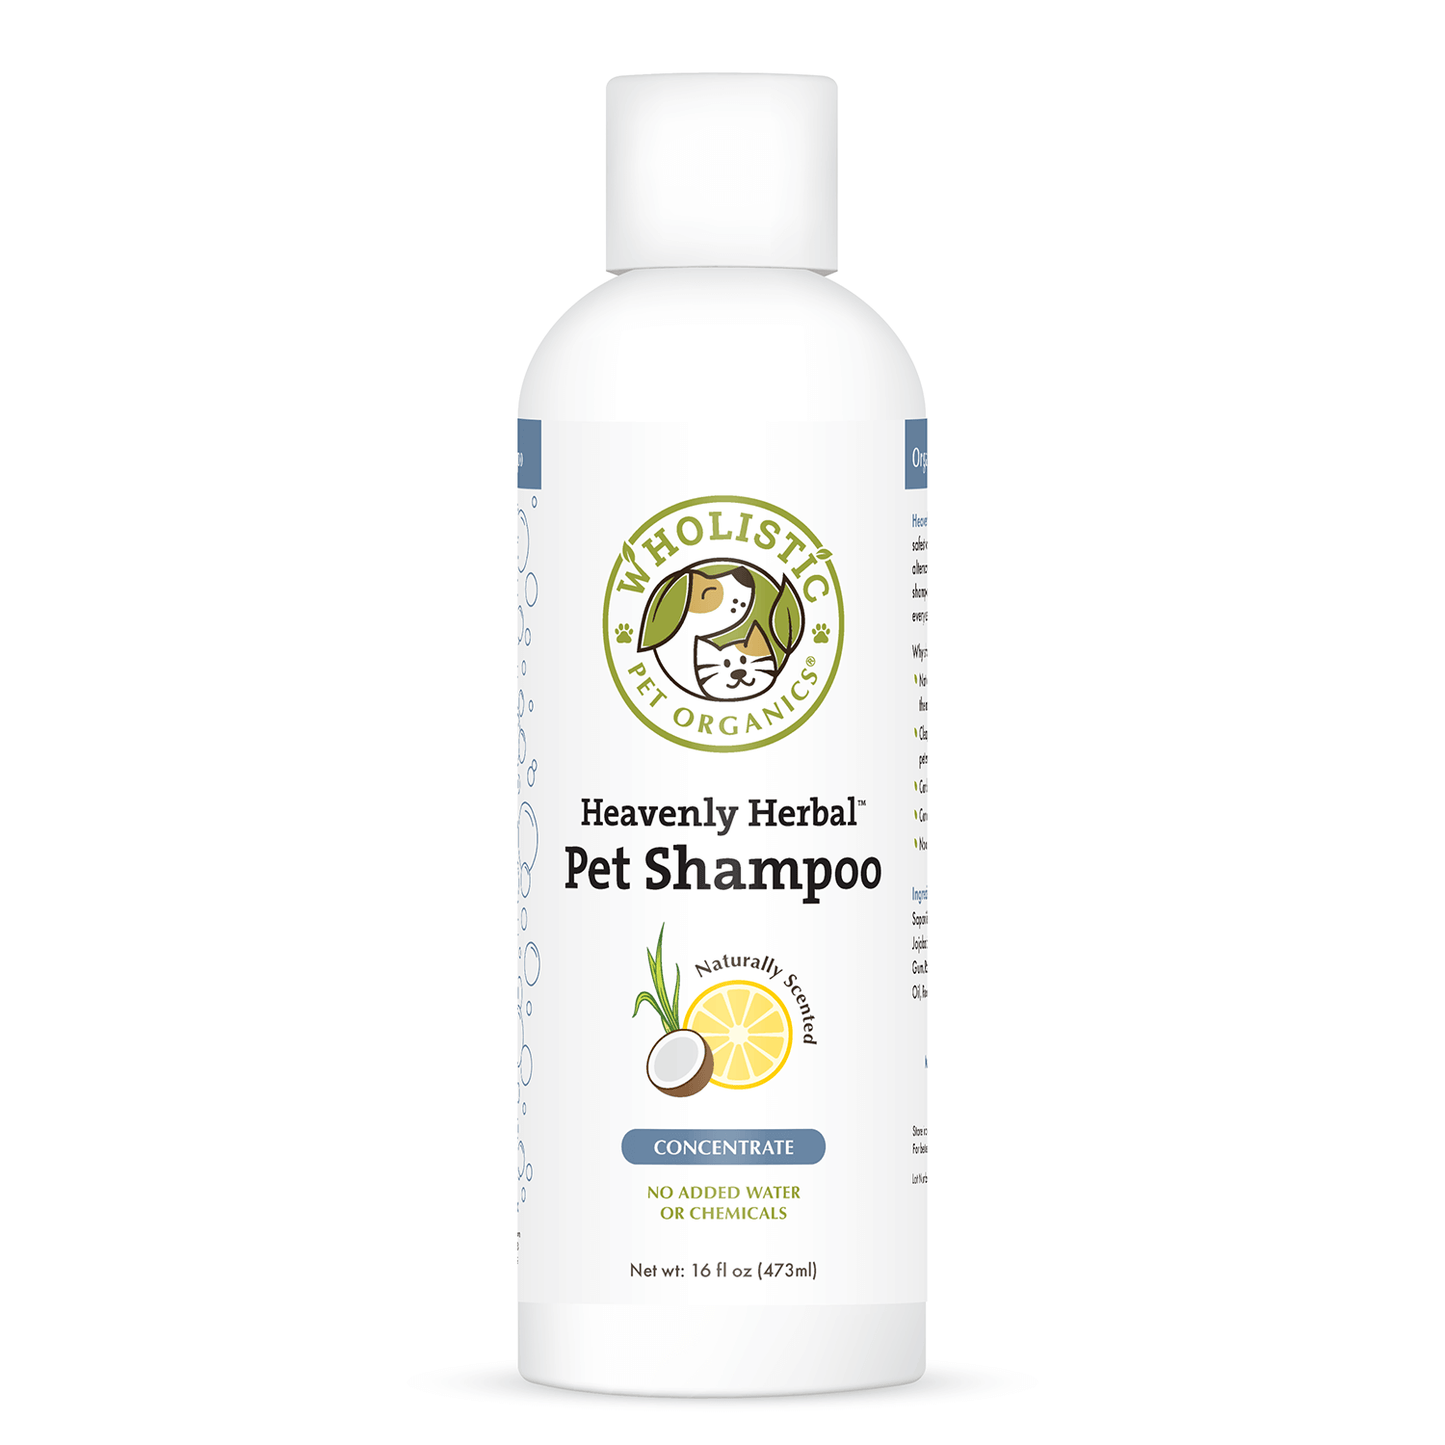 Heavenly Herbal™ Pet Shampoo